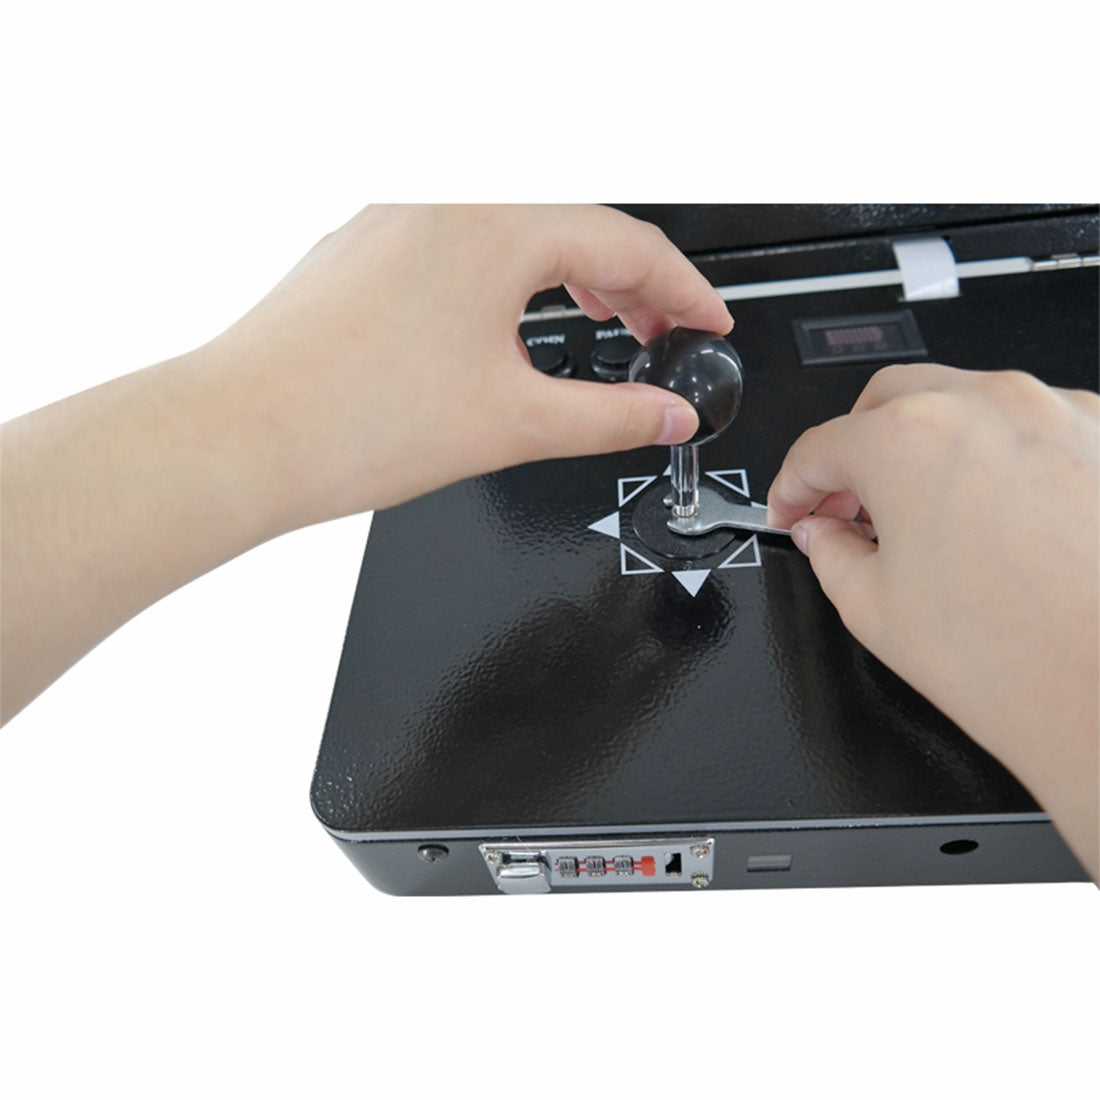 Pandora AUS-S31 14-inch Mini Folding Retro Home Arcade Game Console -  US-Plug